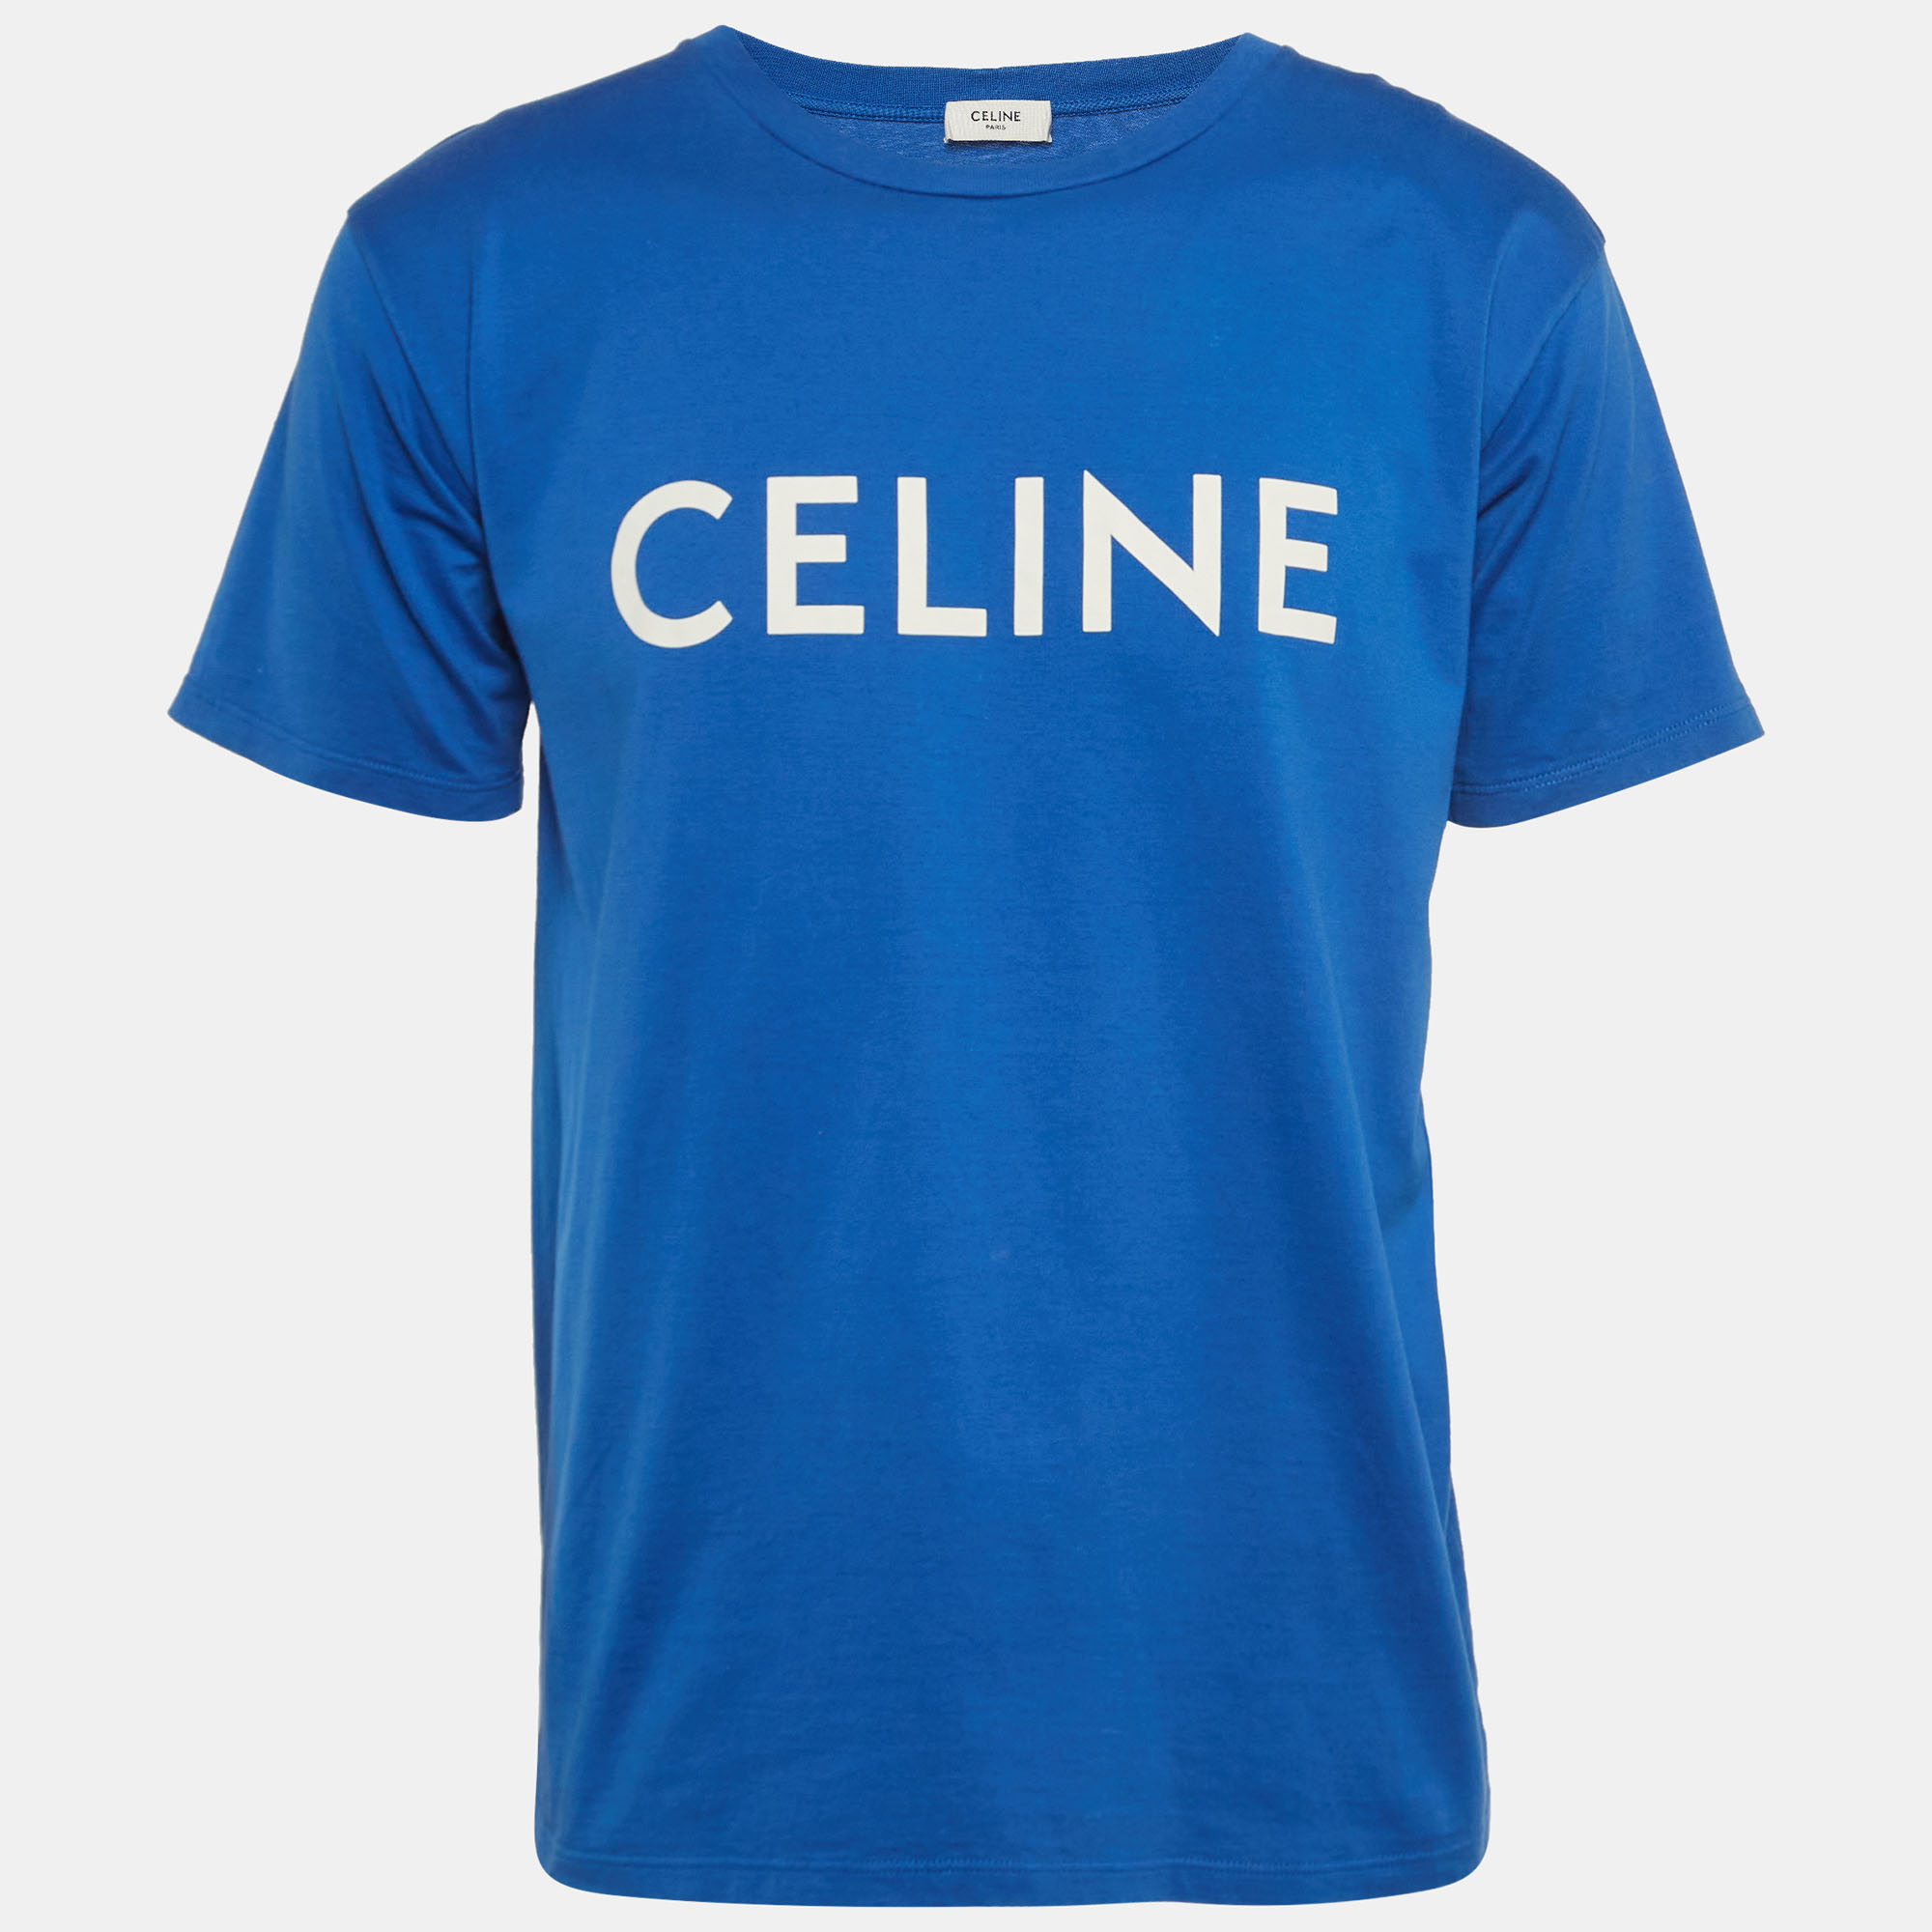 Celine blue logo printed cotton knit crew neck t-shirt xs